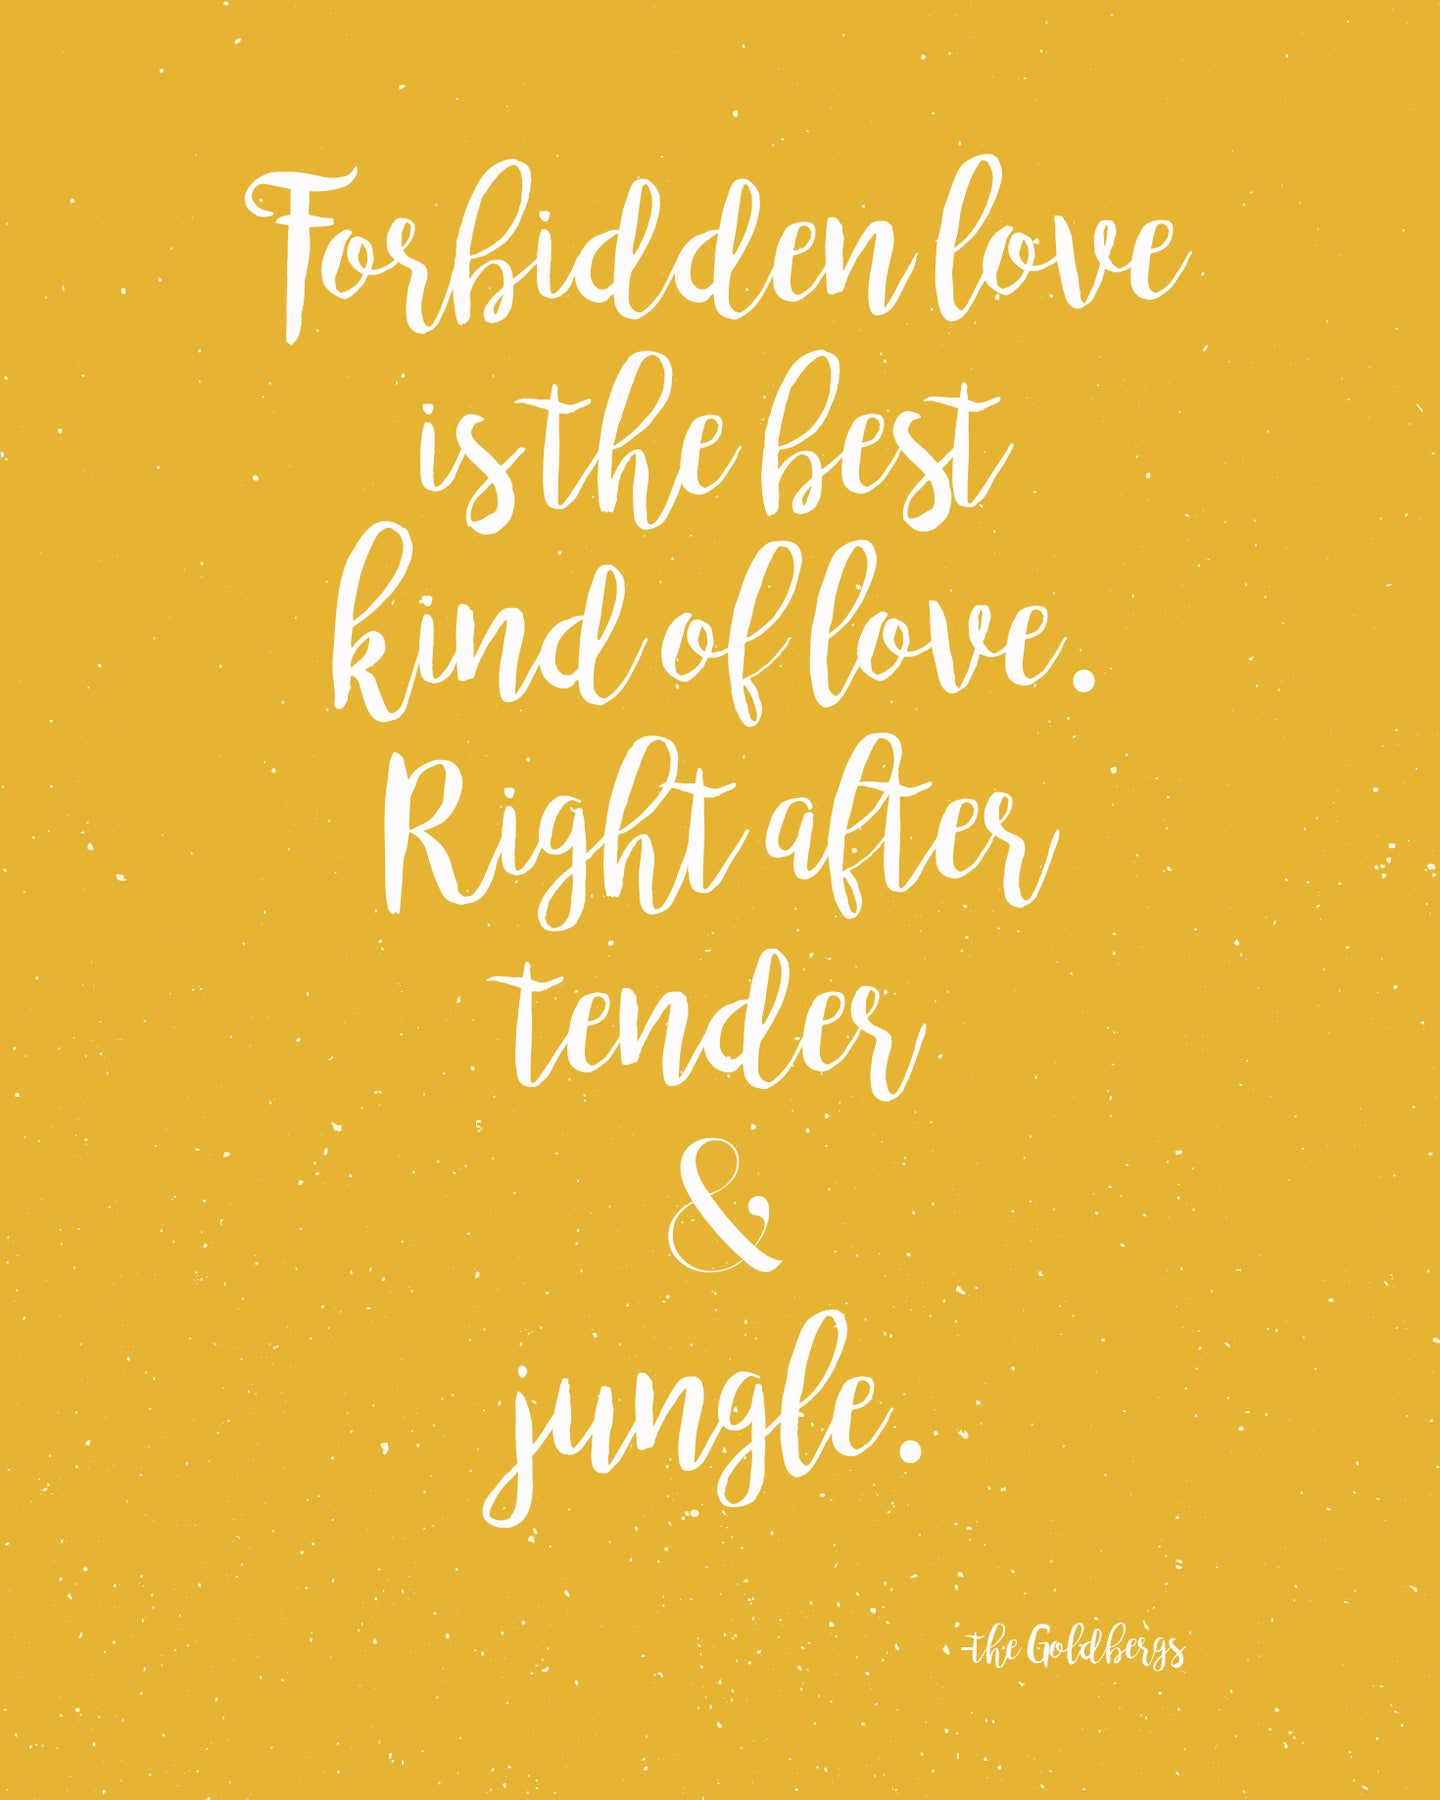 Jungle Love